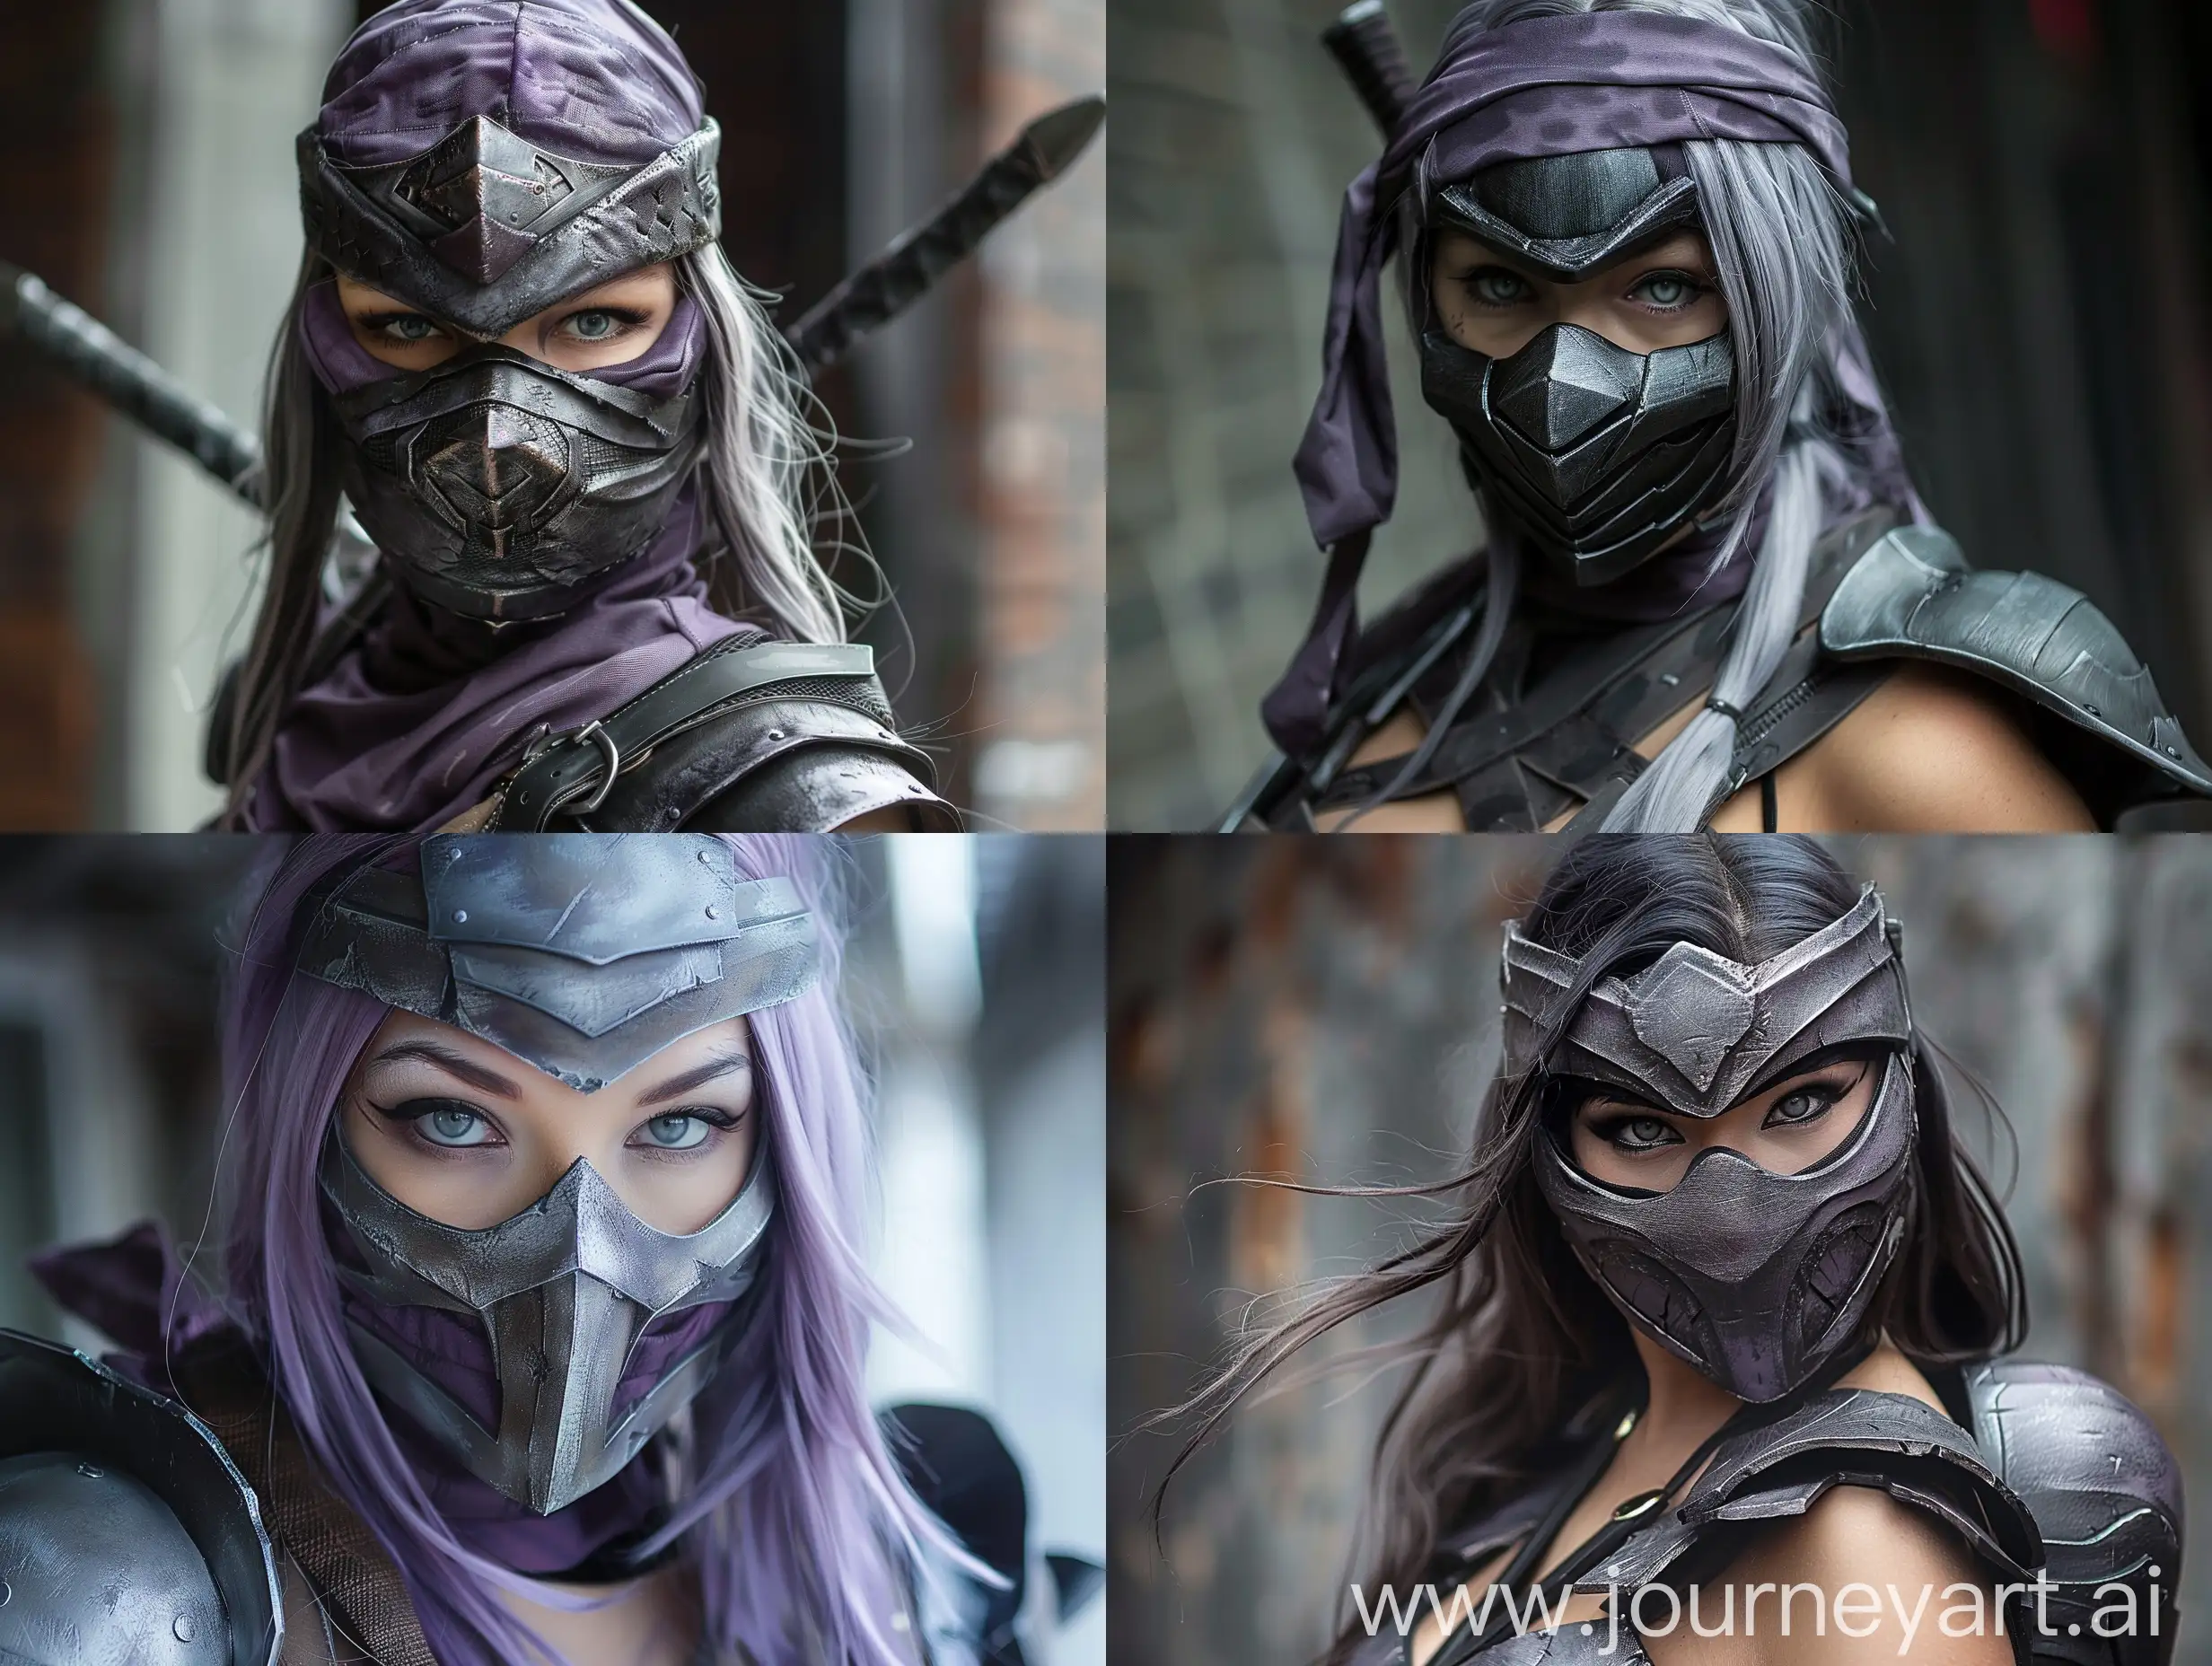 make shredder from TMNT a photorealistic female cosplayer
